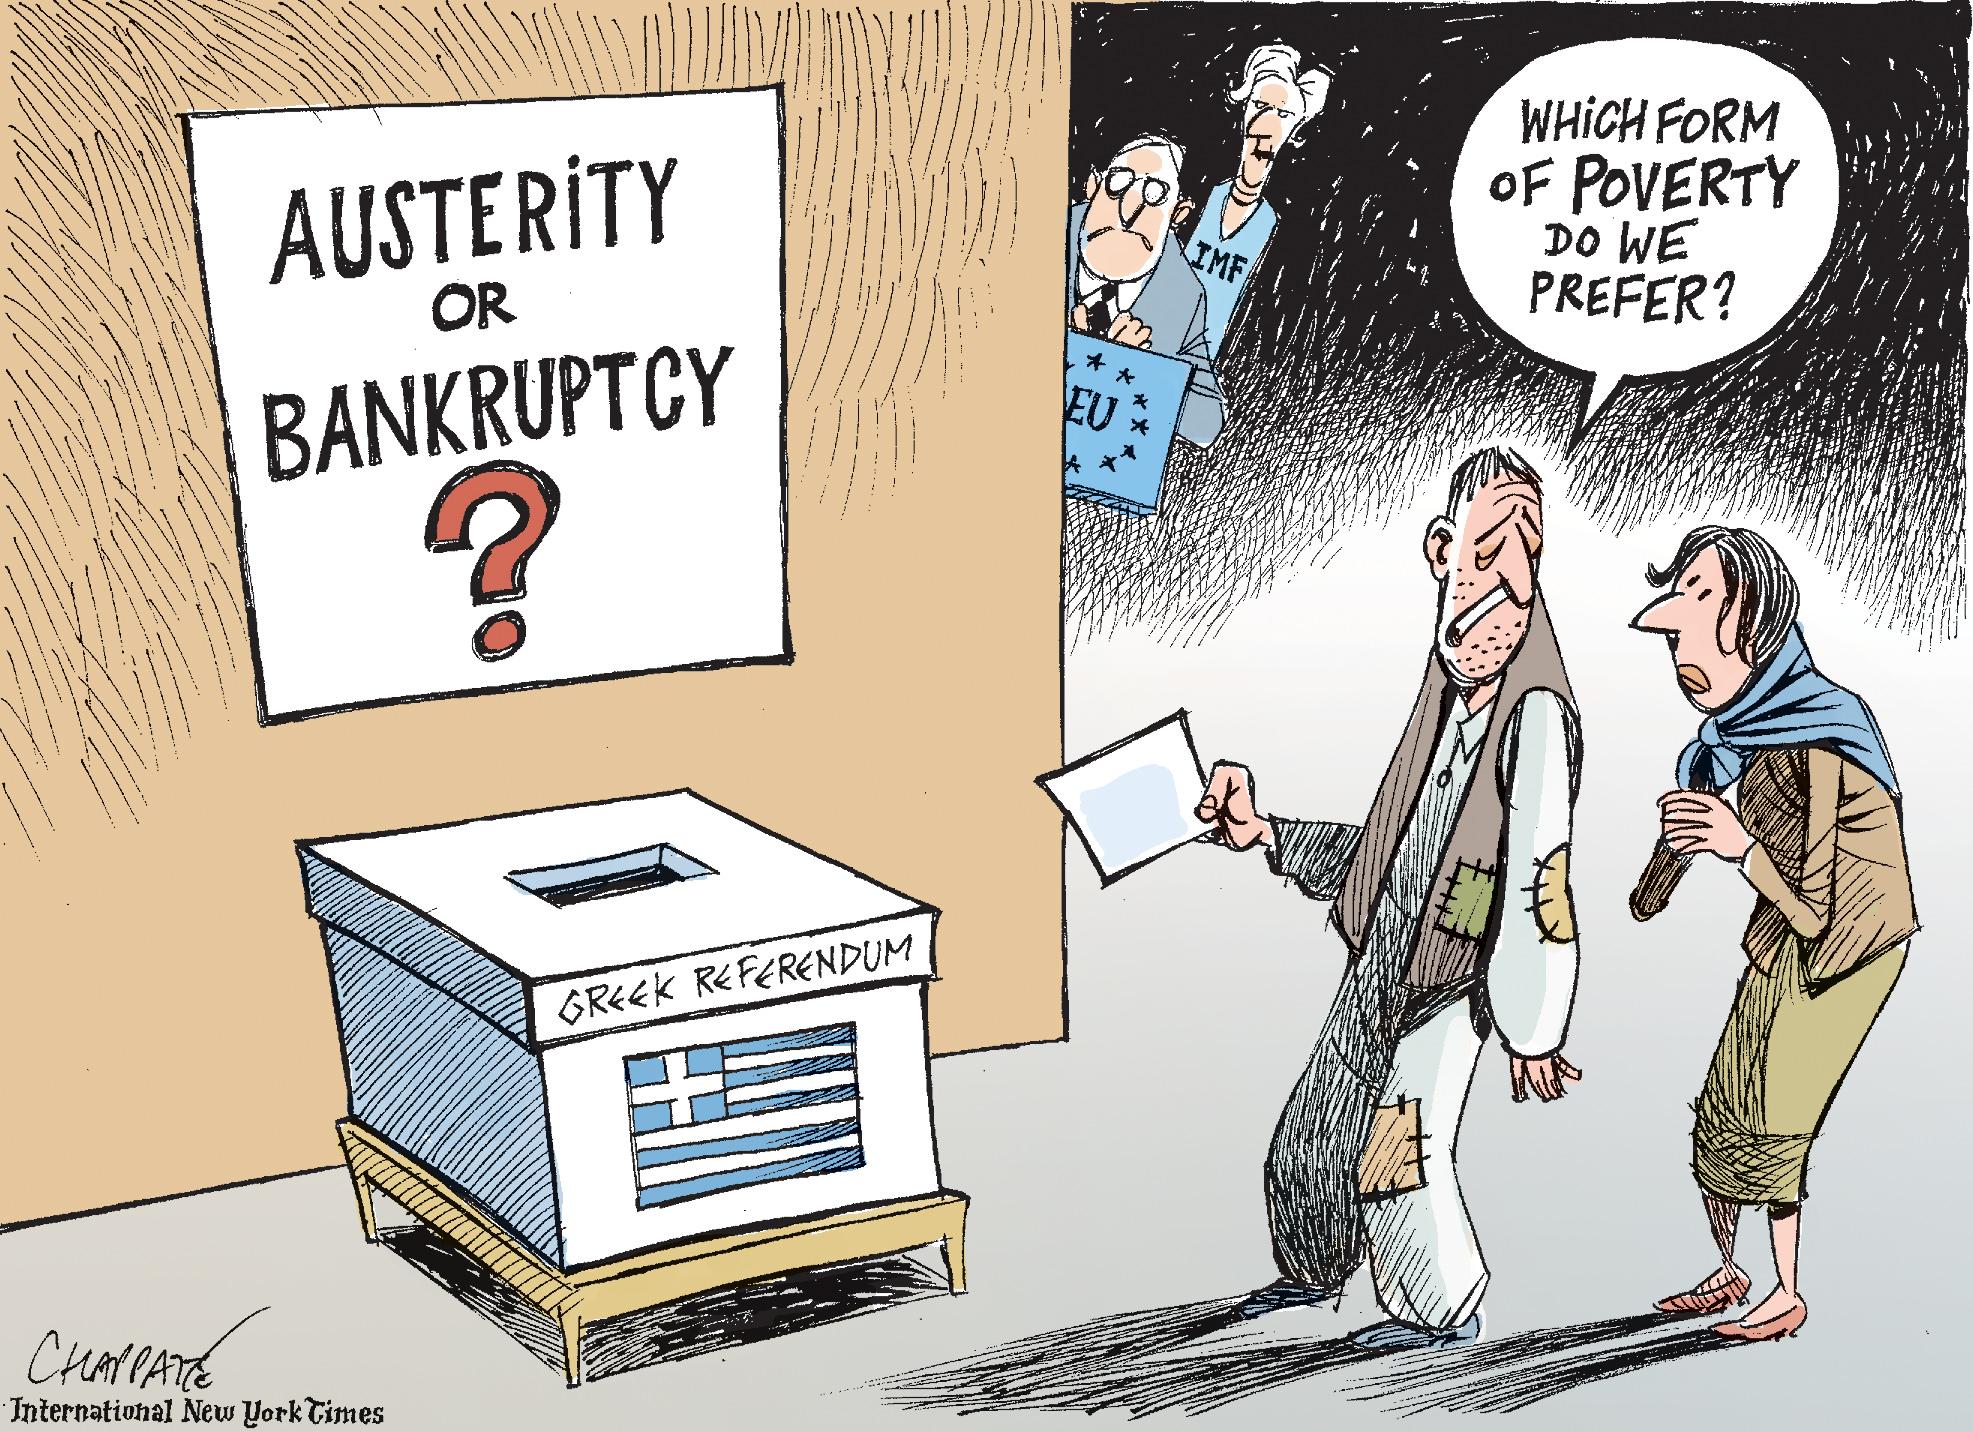 Referendum on the Greek Debt